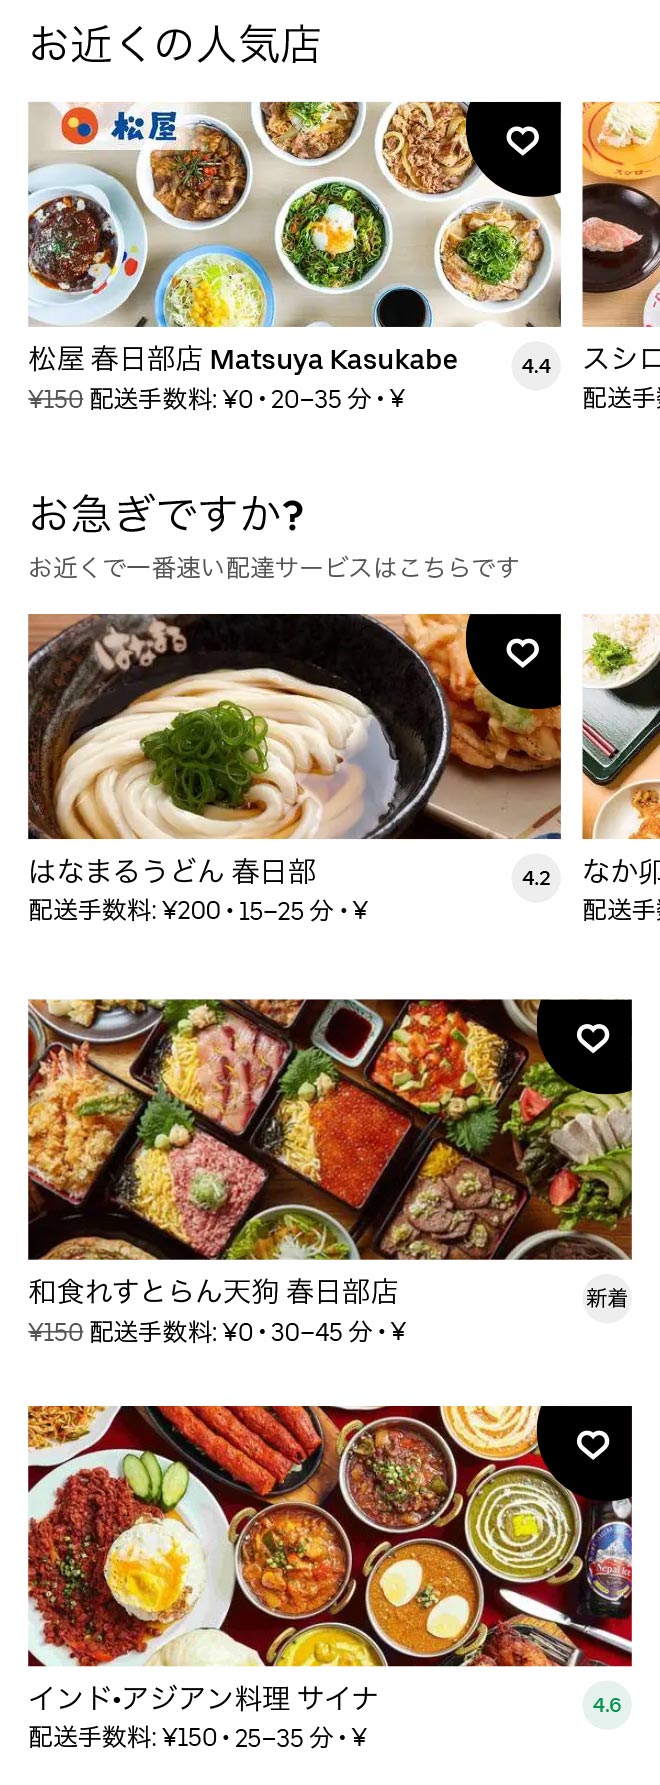 Kasukabe menu 2101 01